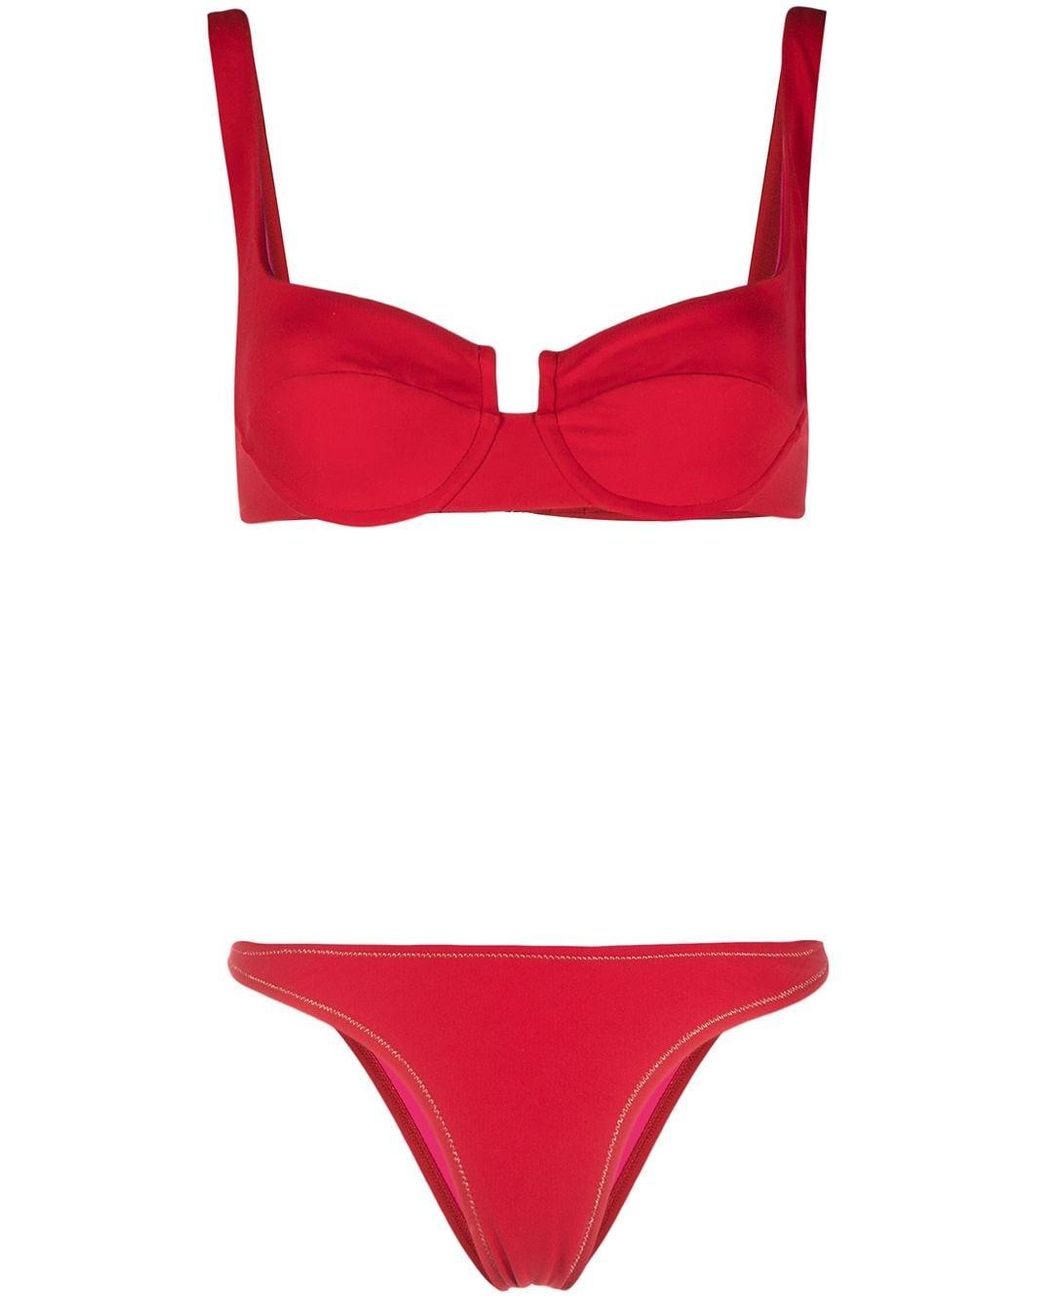 Reina Olga Brigitte Bikini Set in Red - Lyst